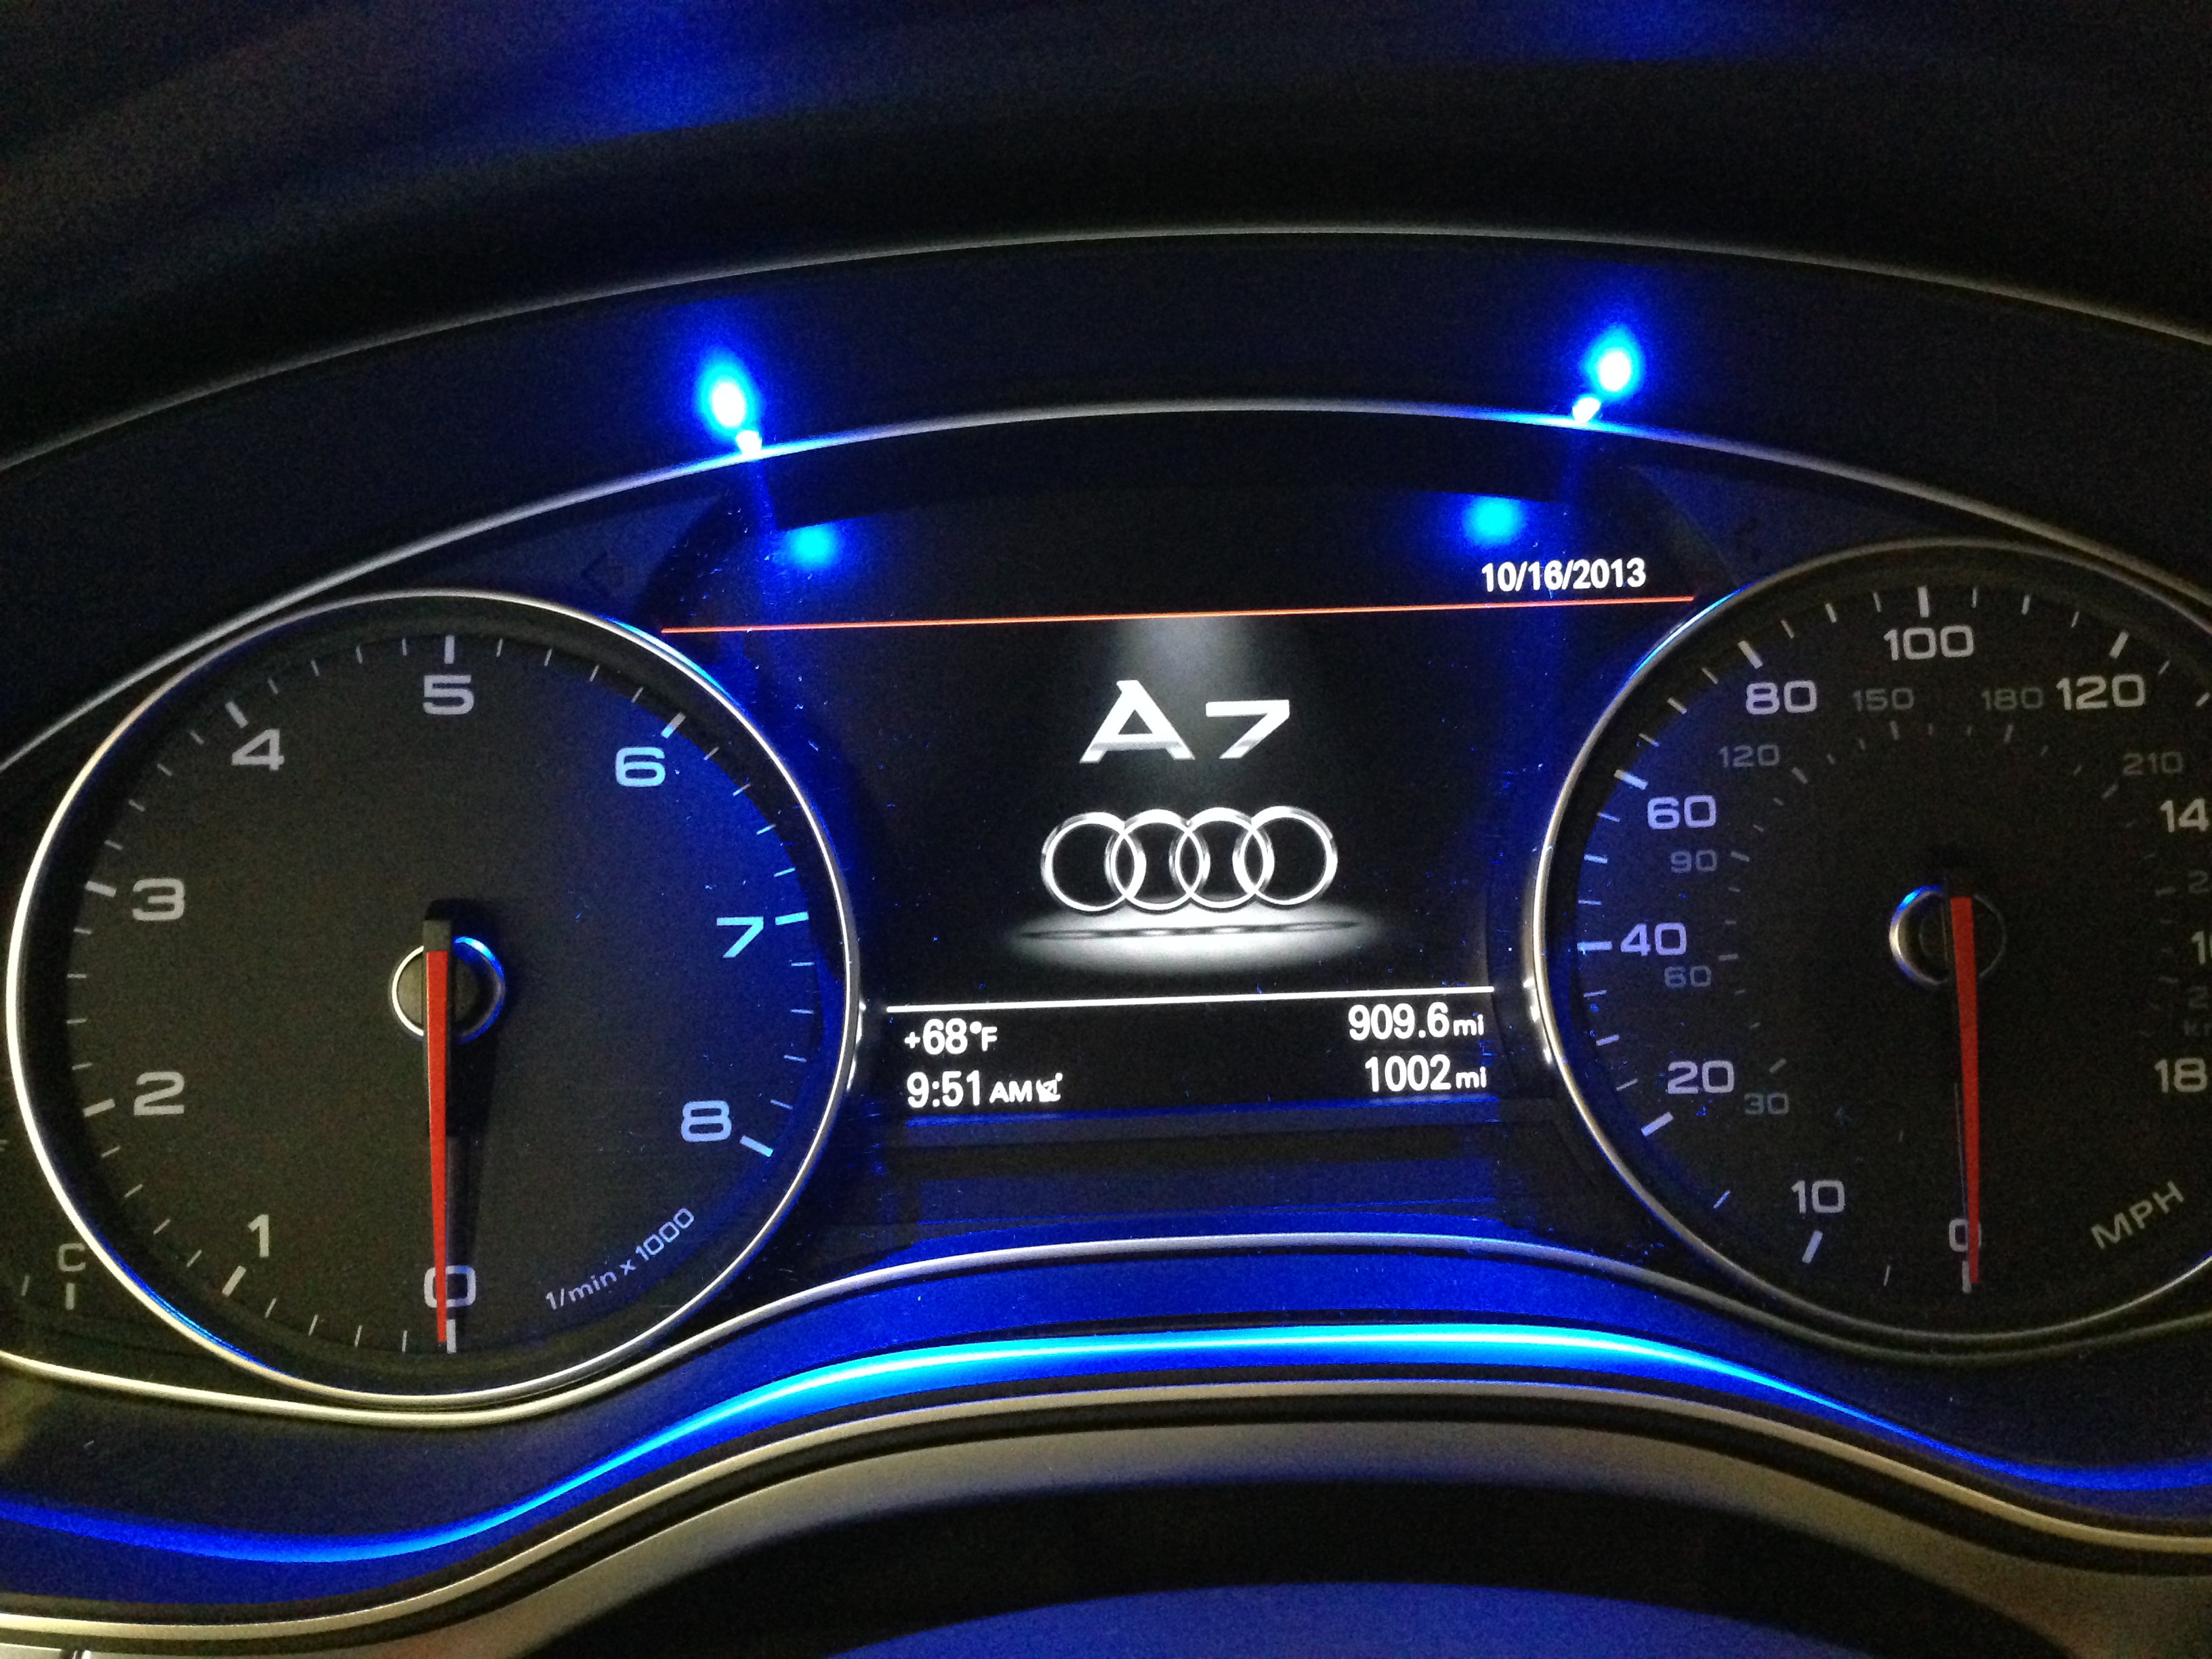 Custom K40 Police Radar Detector Alert LED's and Speaker Installed on 2014 Audi A7 in Allston, MA